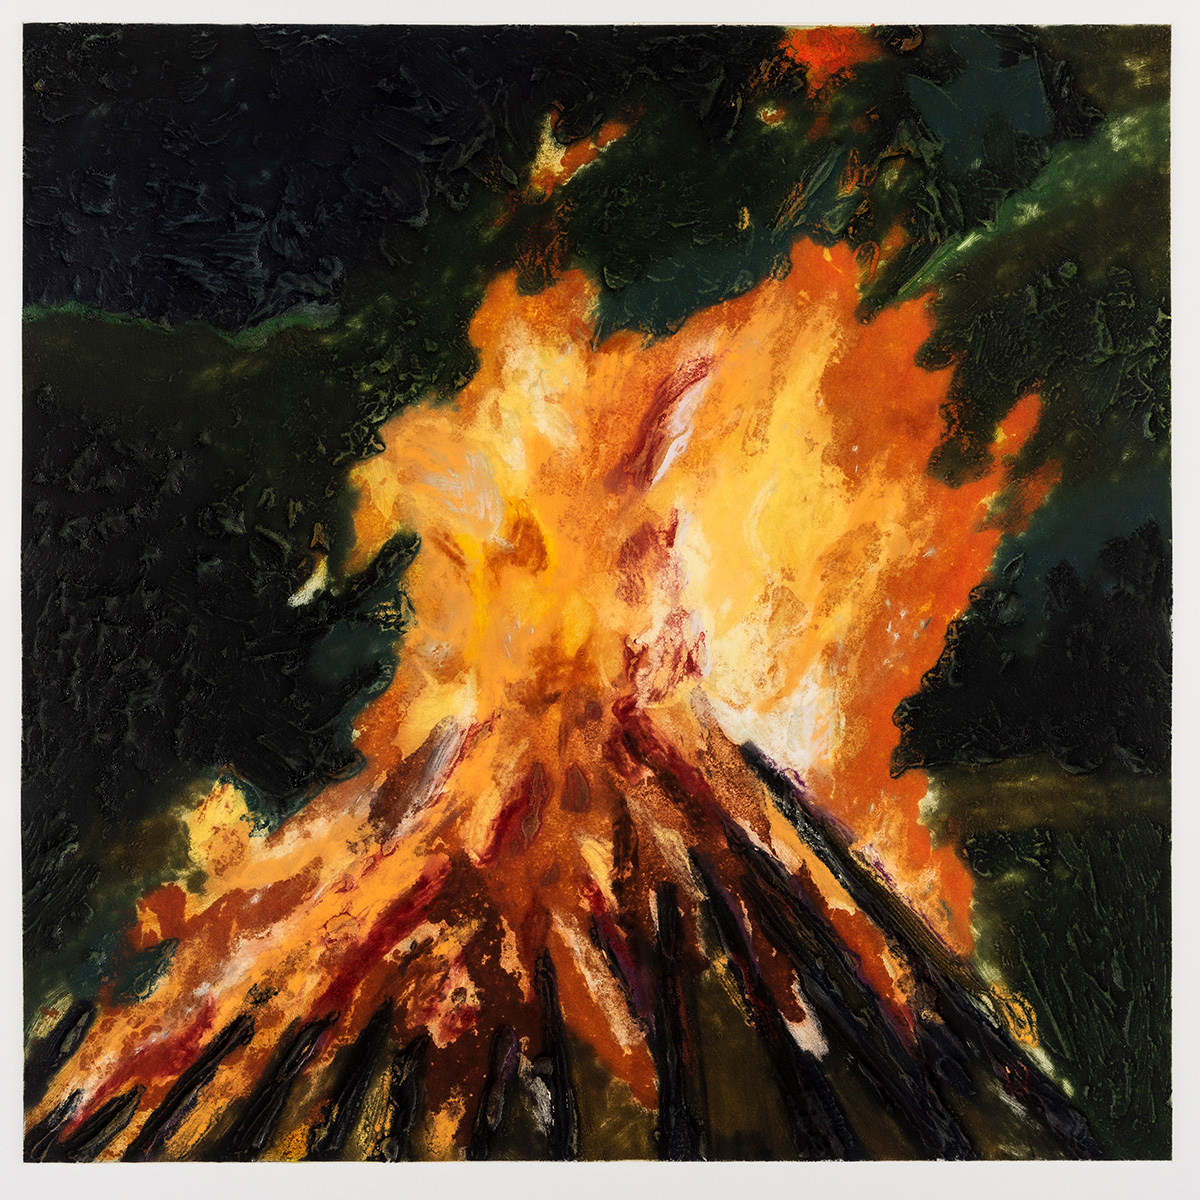 David-Inshaw-Bonfire-2019-etching-and-carborundum-on-paper-51cm-square-ed-of-10